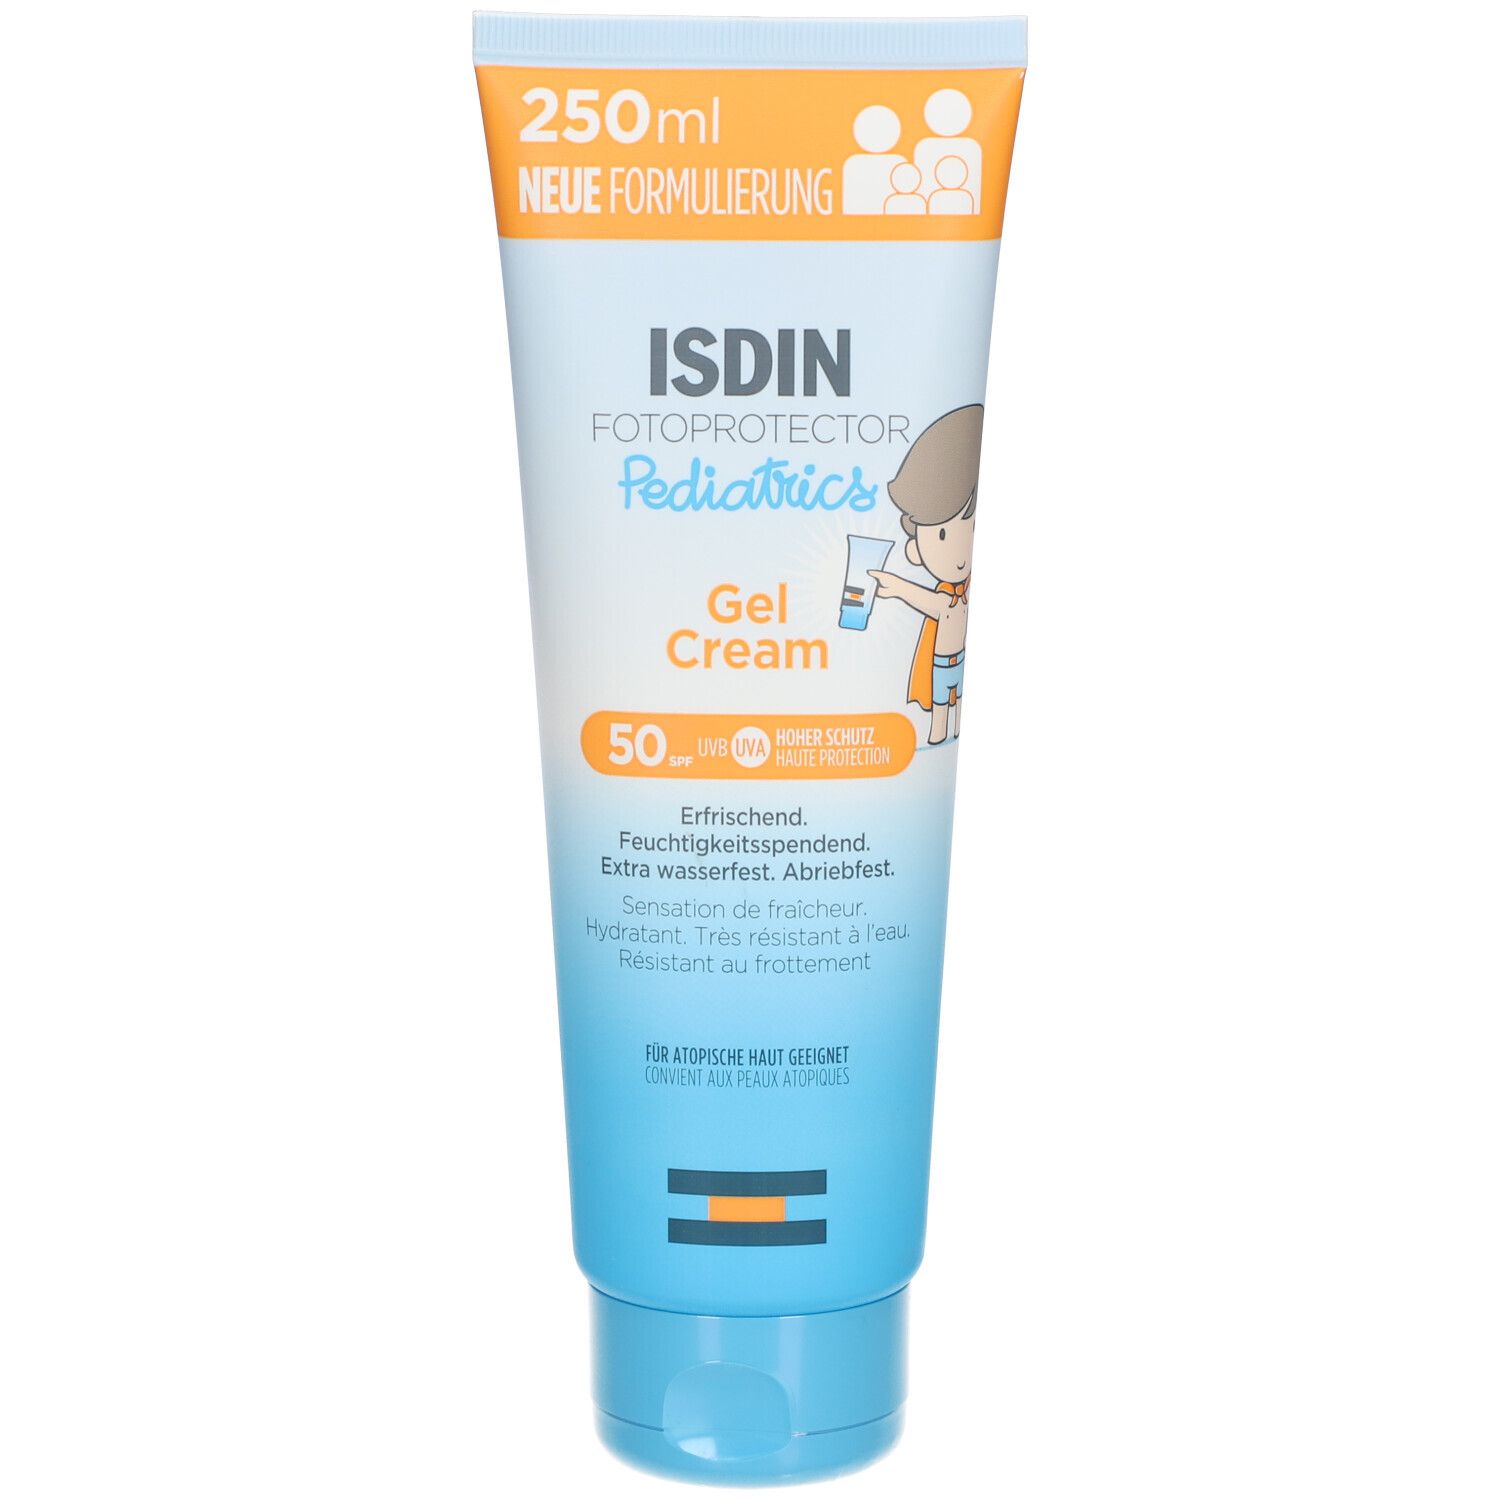 Isdin Fotoprotector Gel-Crème pédiatrique Spf50+